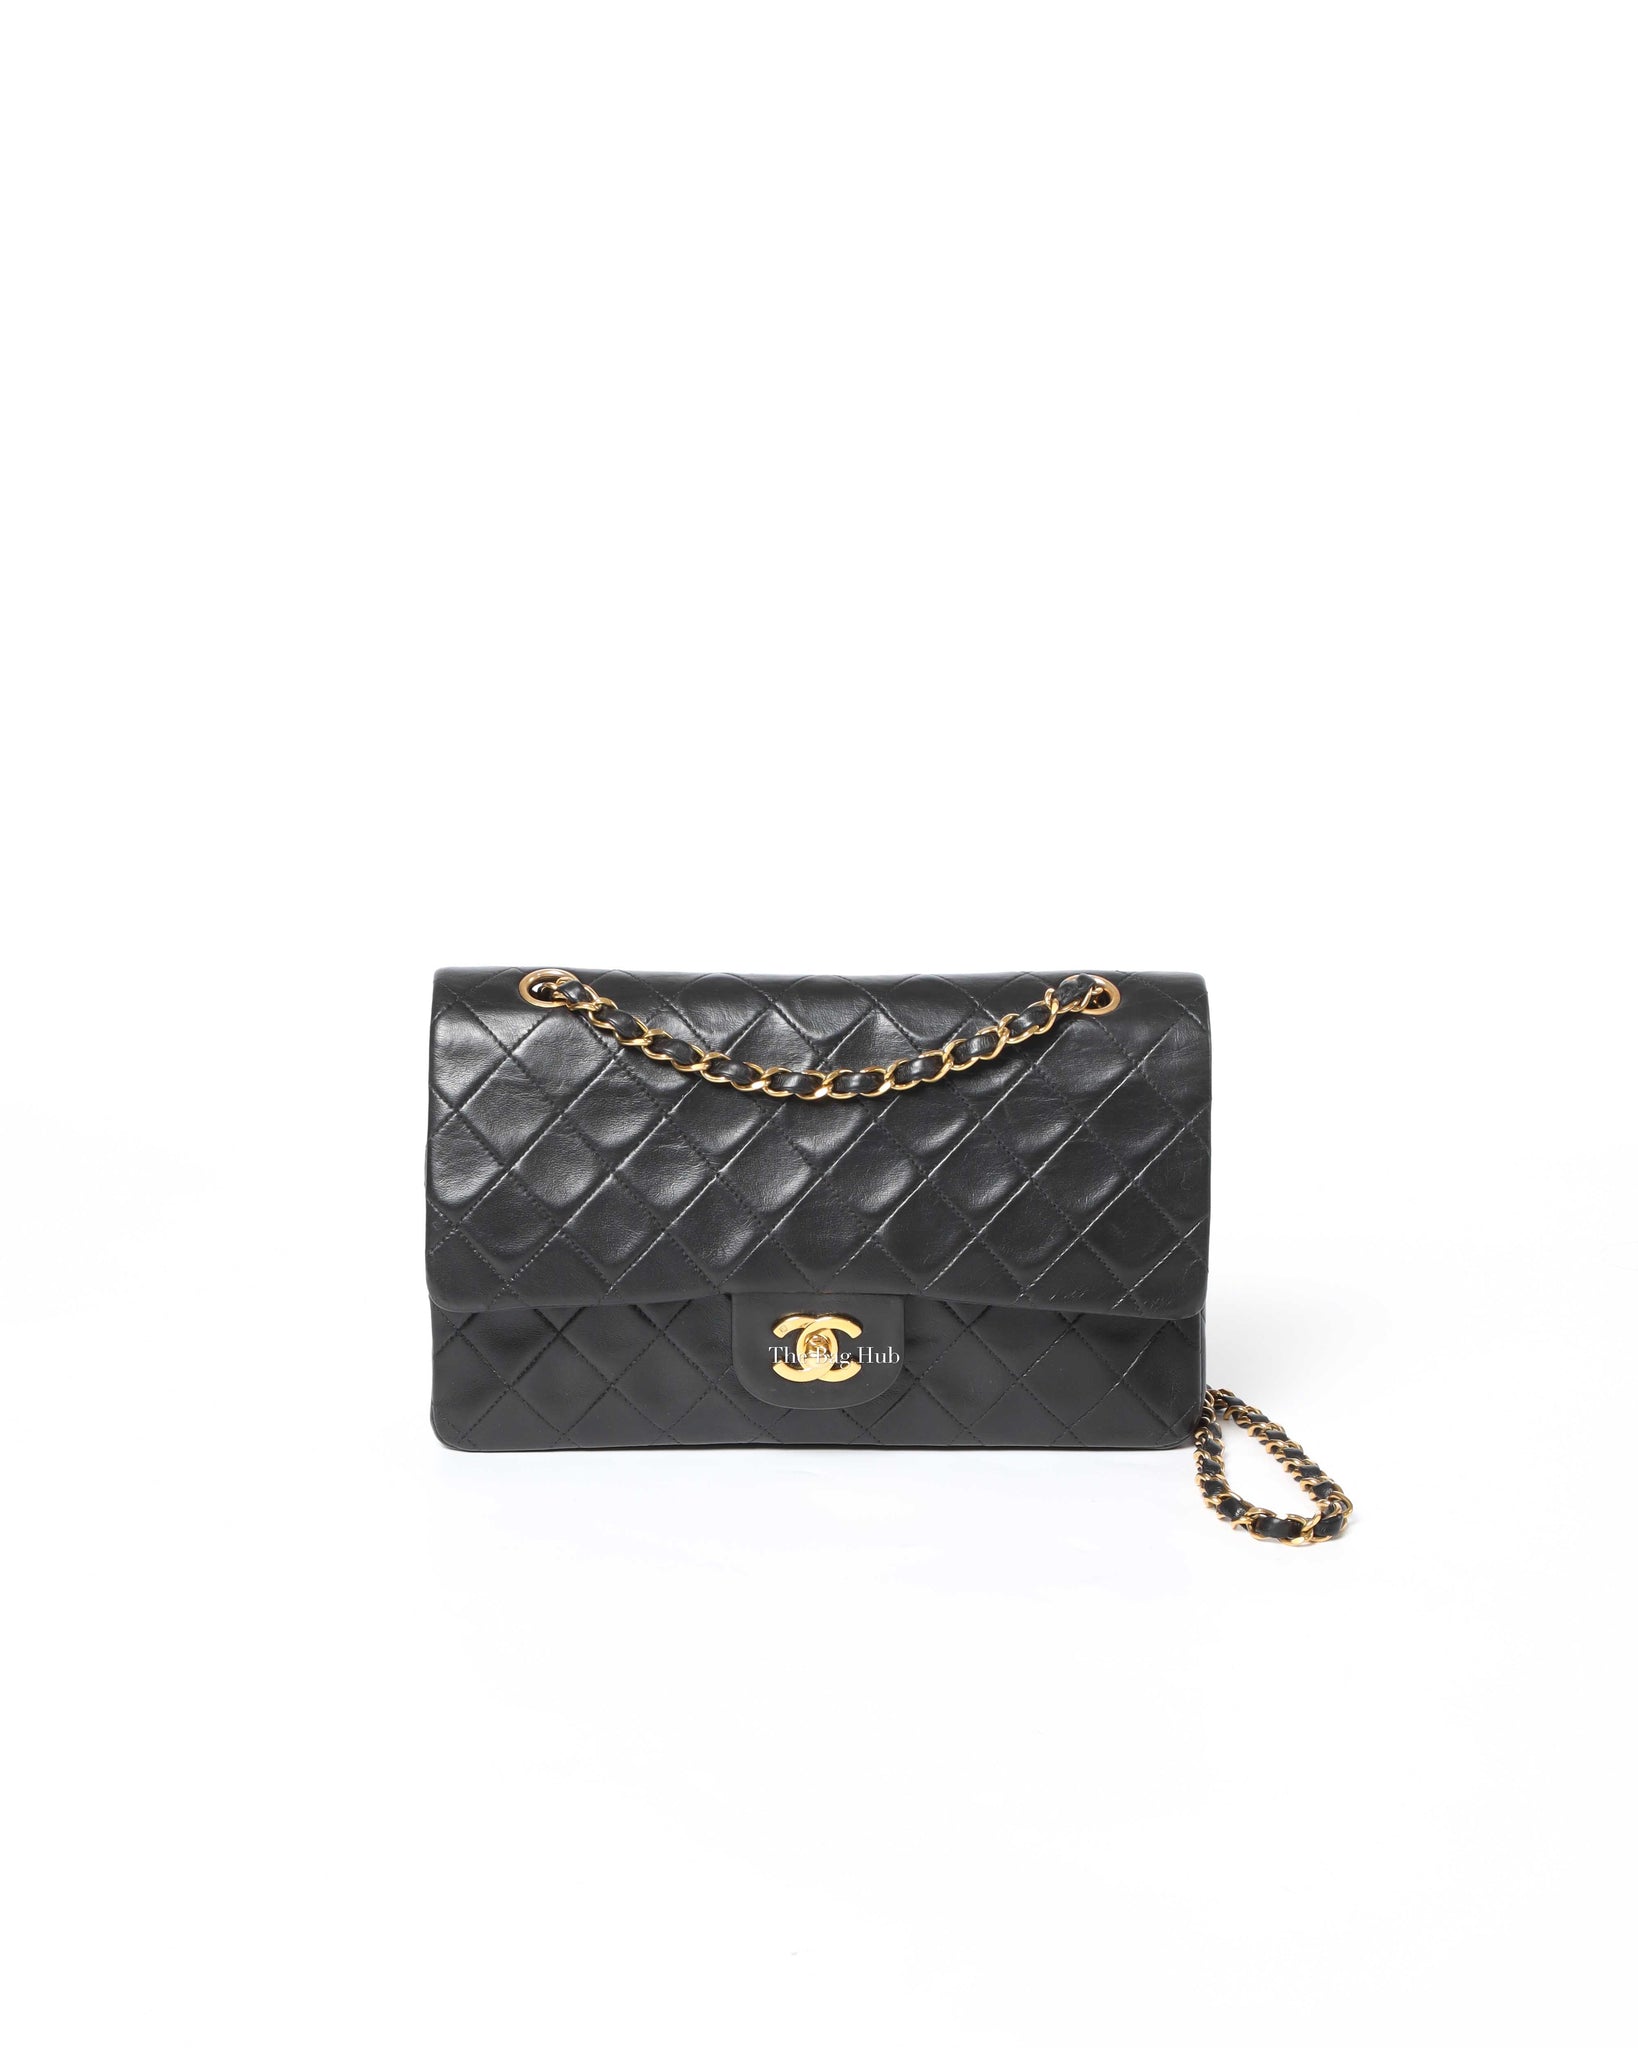 Chanel Black Single Flap Bag